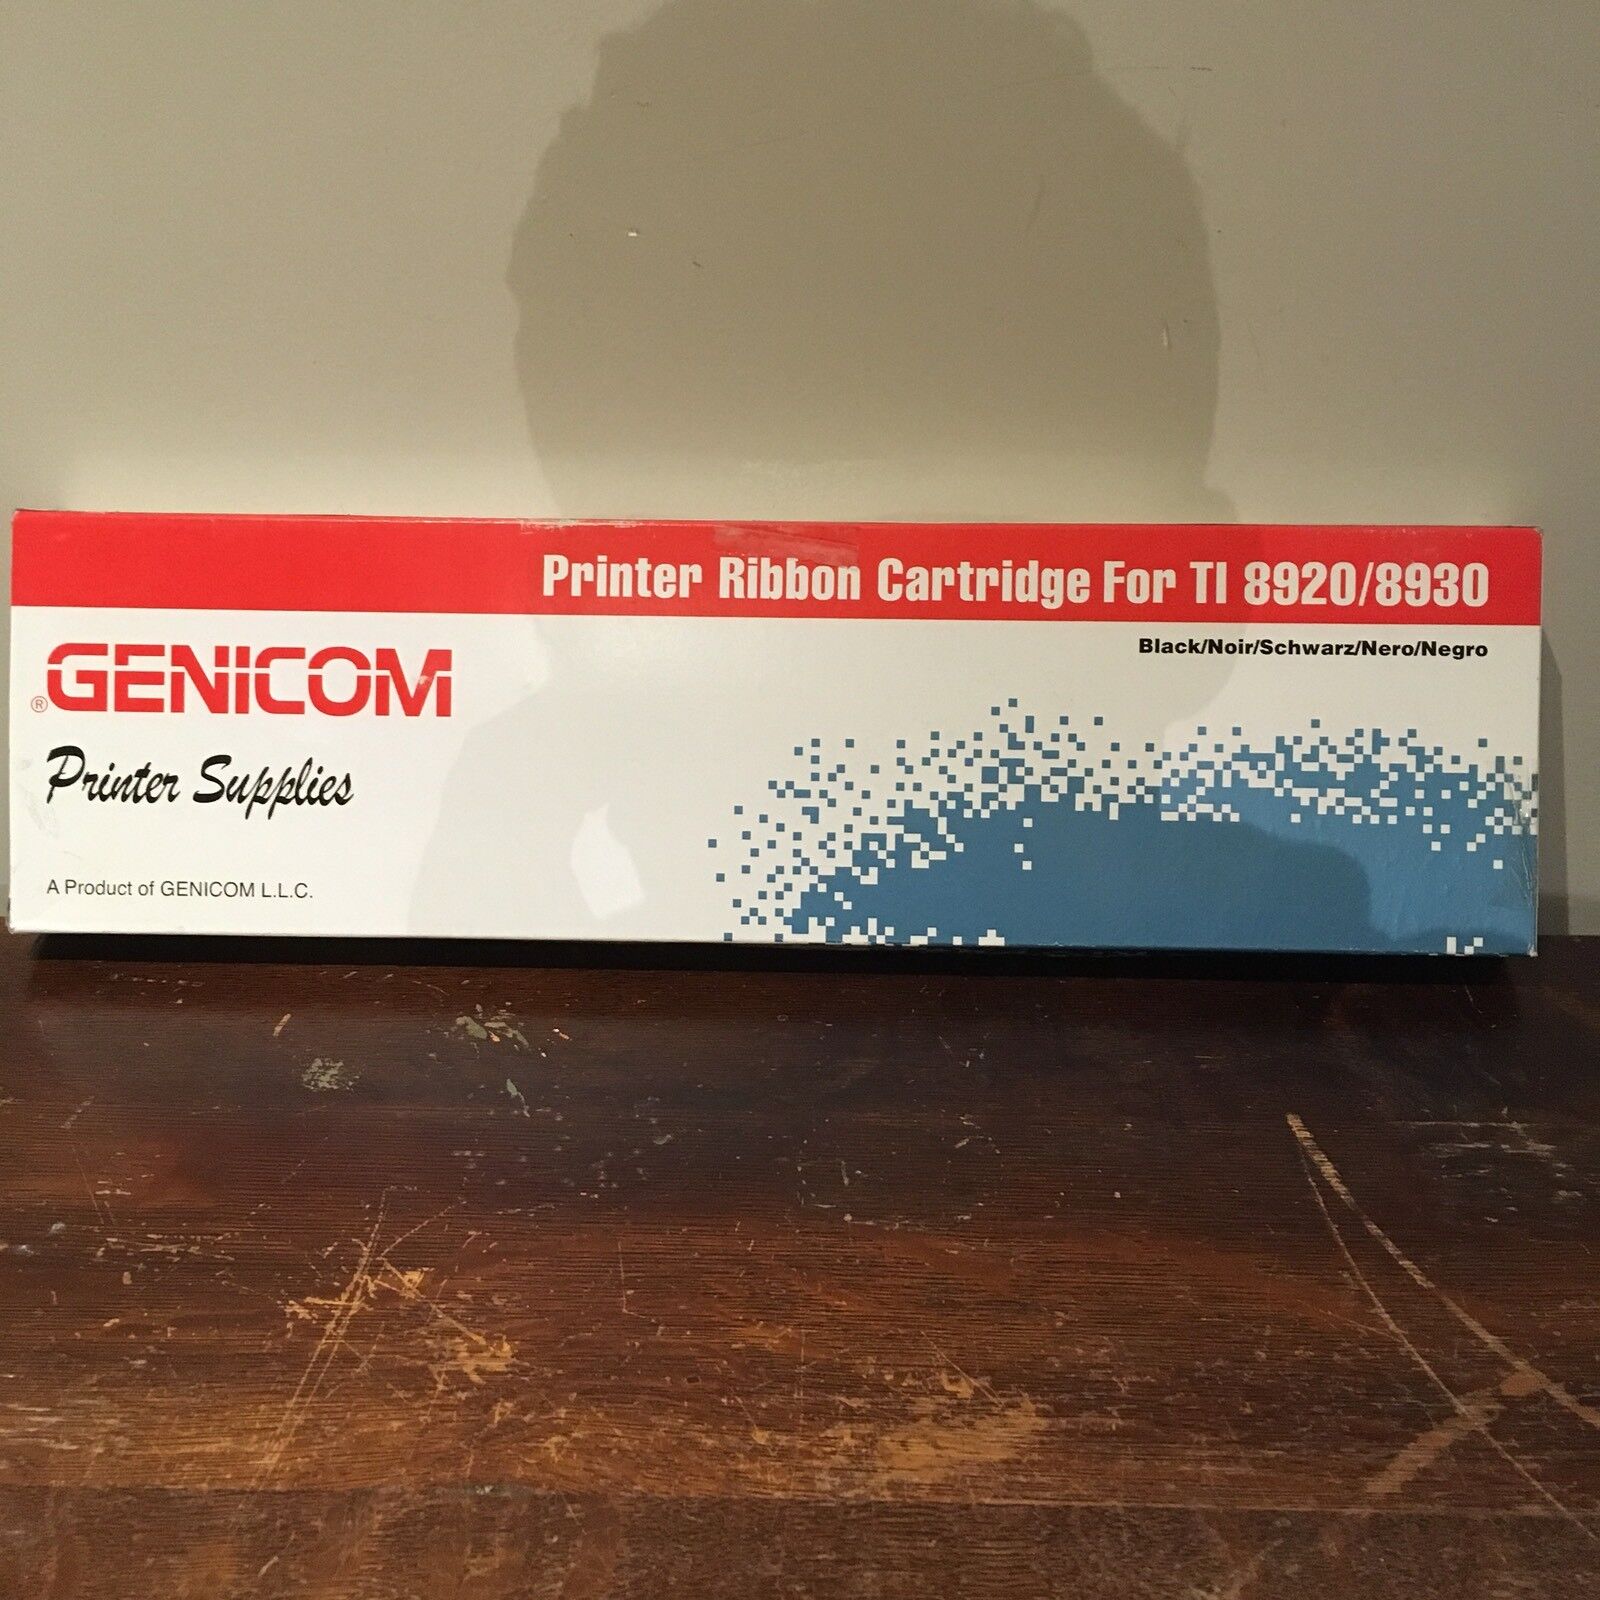 Genicom Printer Ribbon Cartridge 1A3066B01 for TI 8920 TI 8930 Black 8900 series